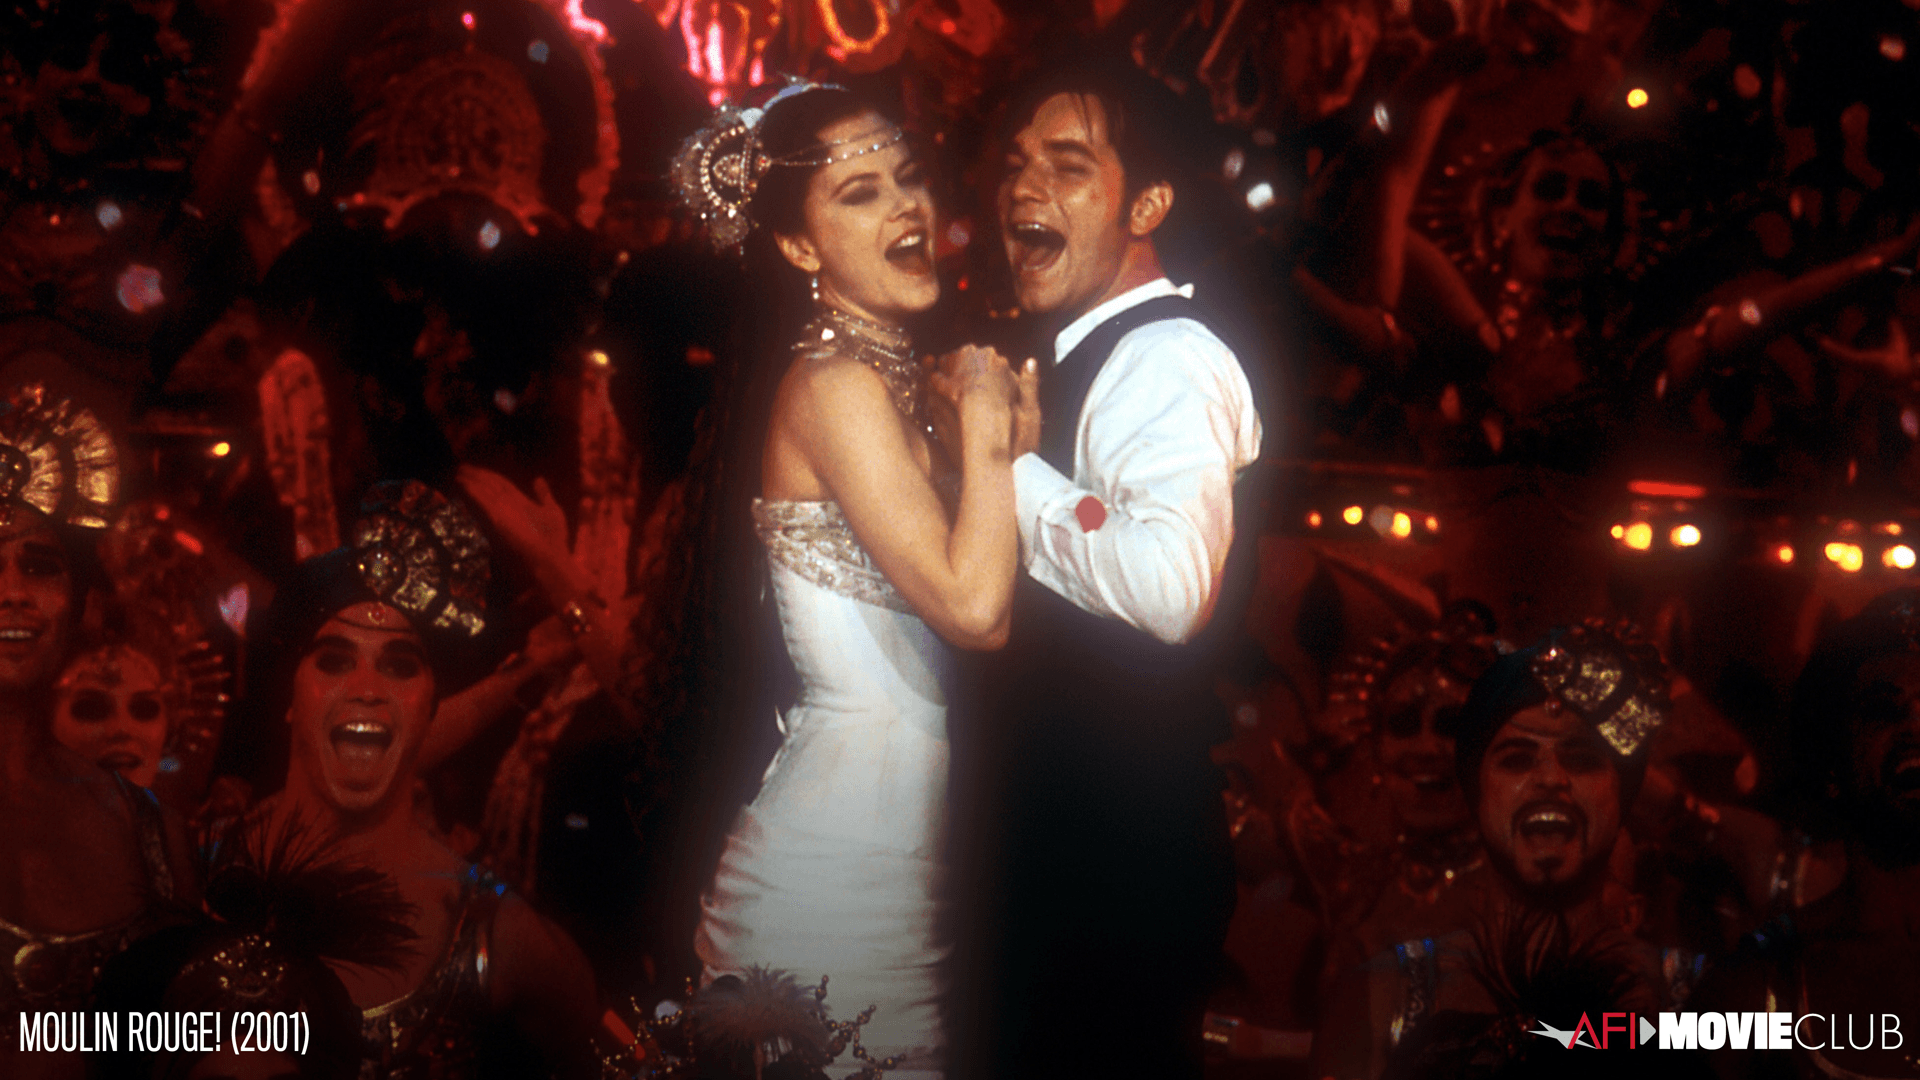 Moulin Rouge! Film Still - Nicole Kidman and Ewan McGregor